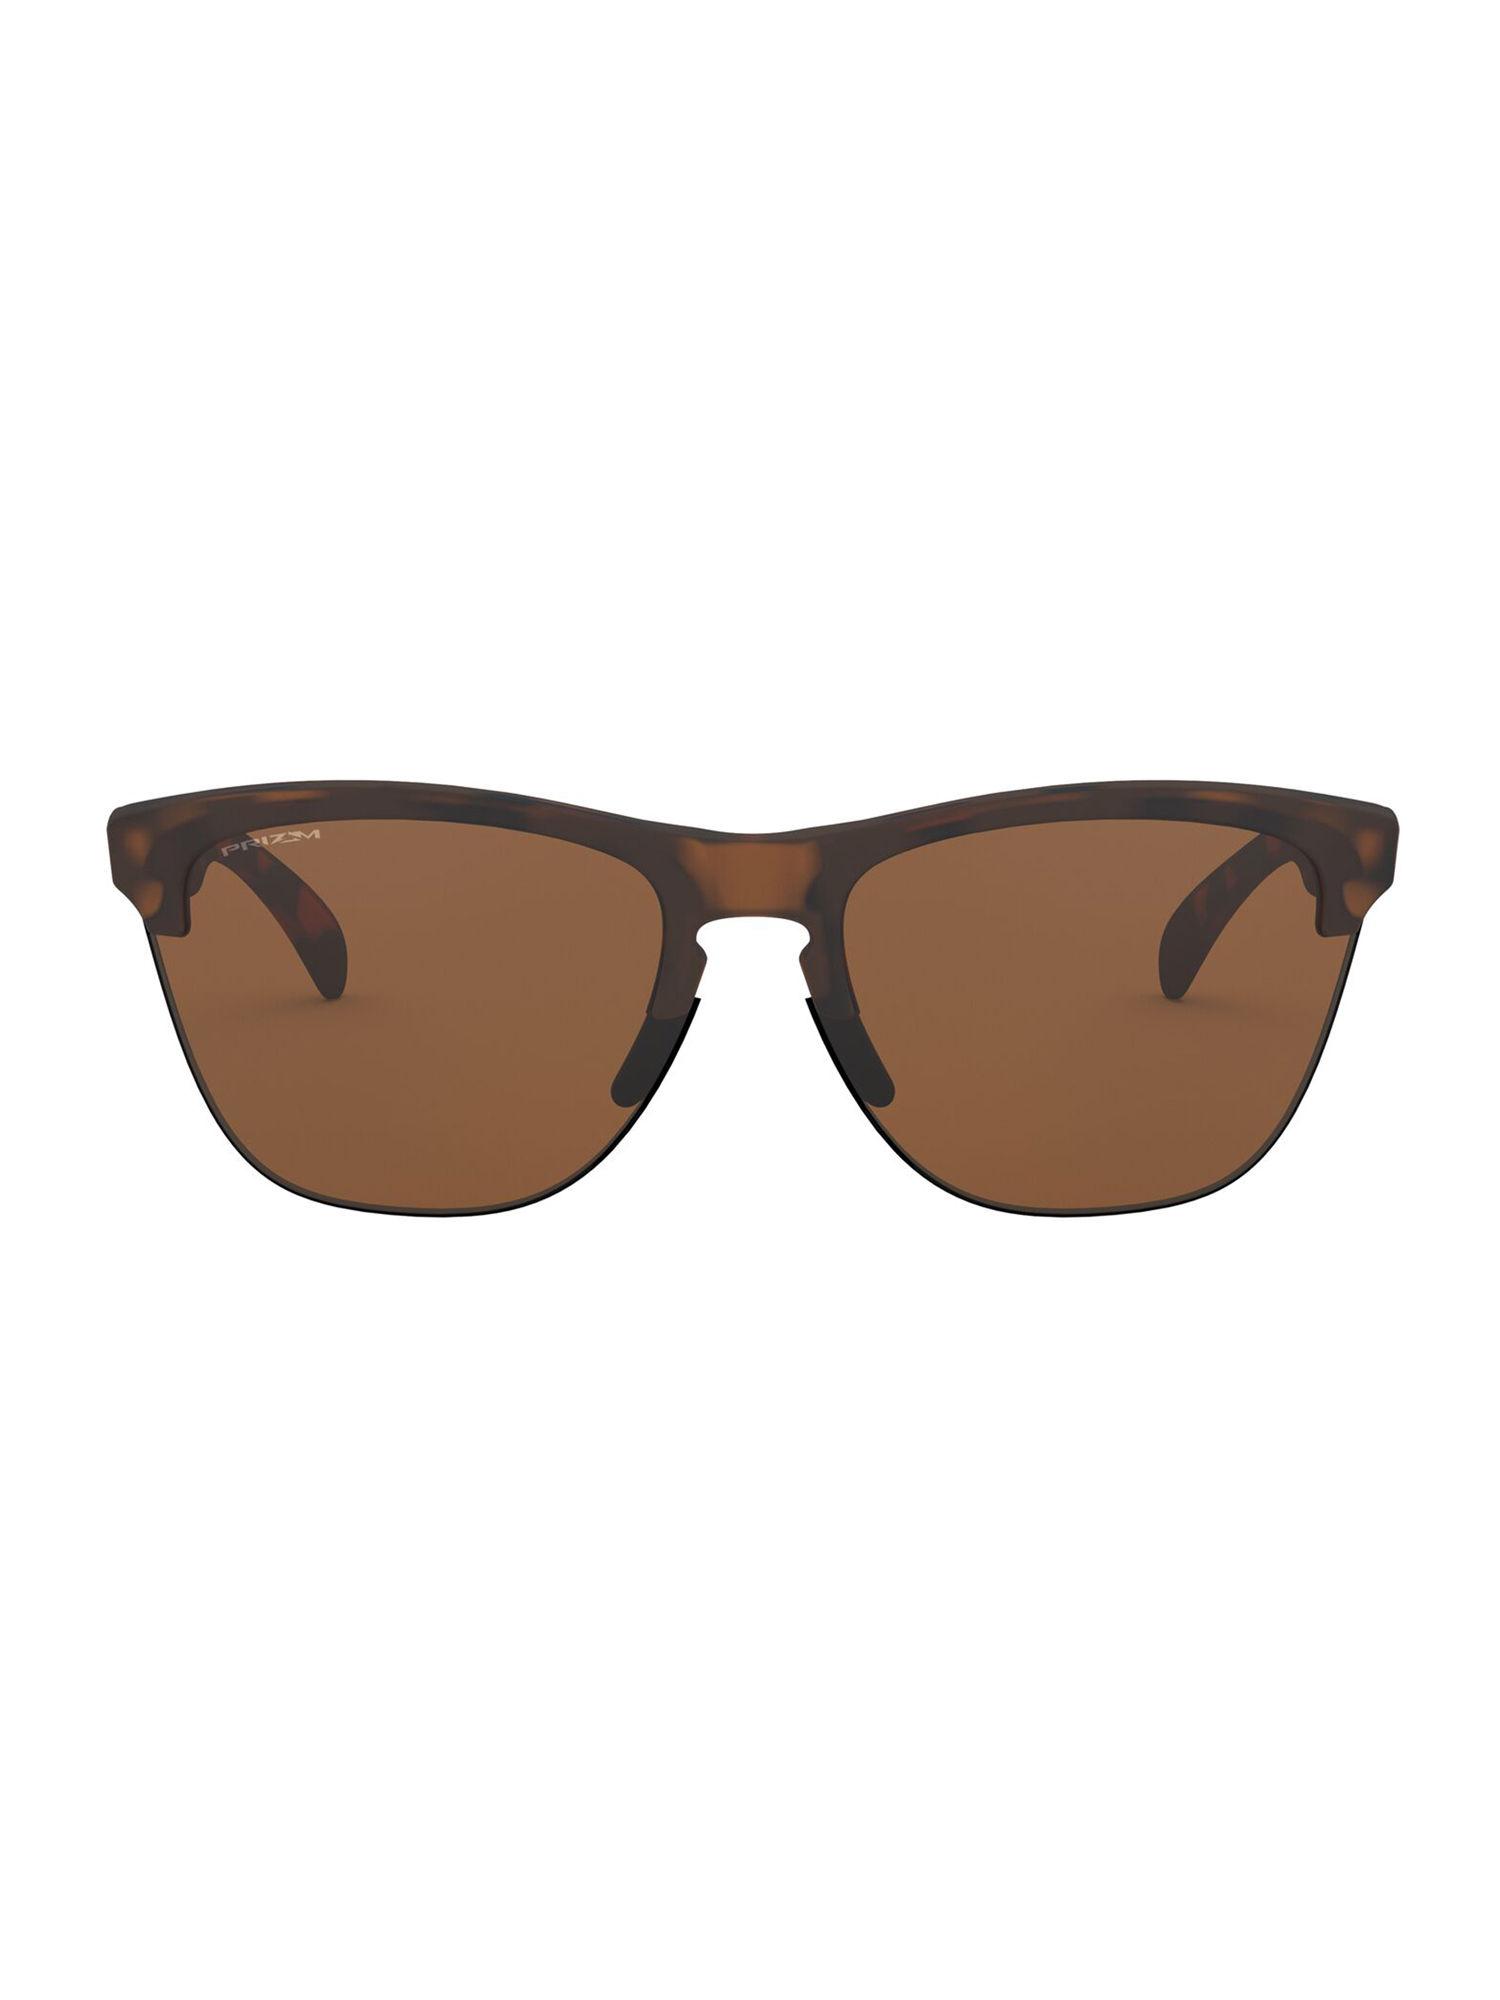 Matte Brown Tortoise Sunglasses(0OO9374I|Round |Brown Frame|Brown Lens |63 mm )